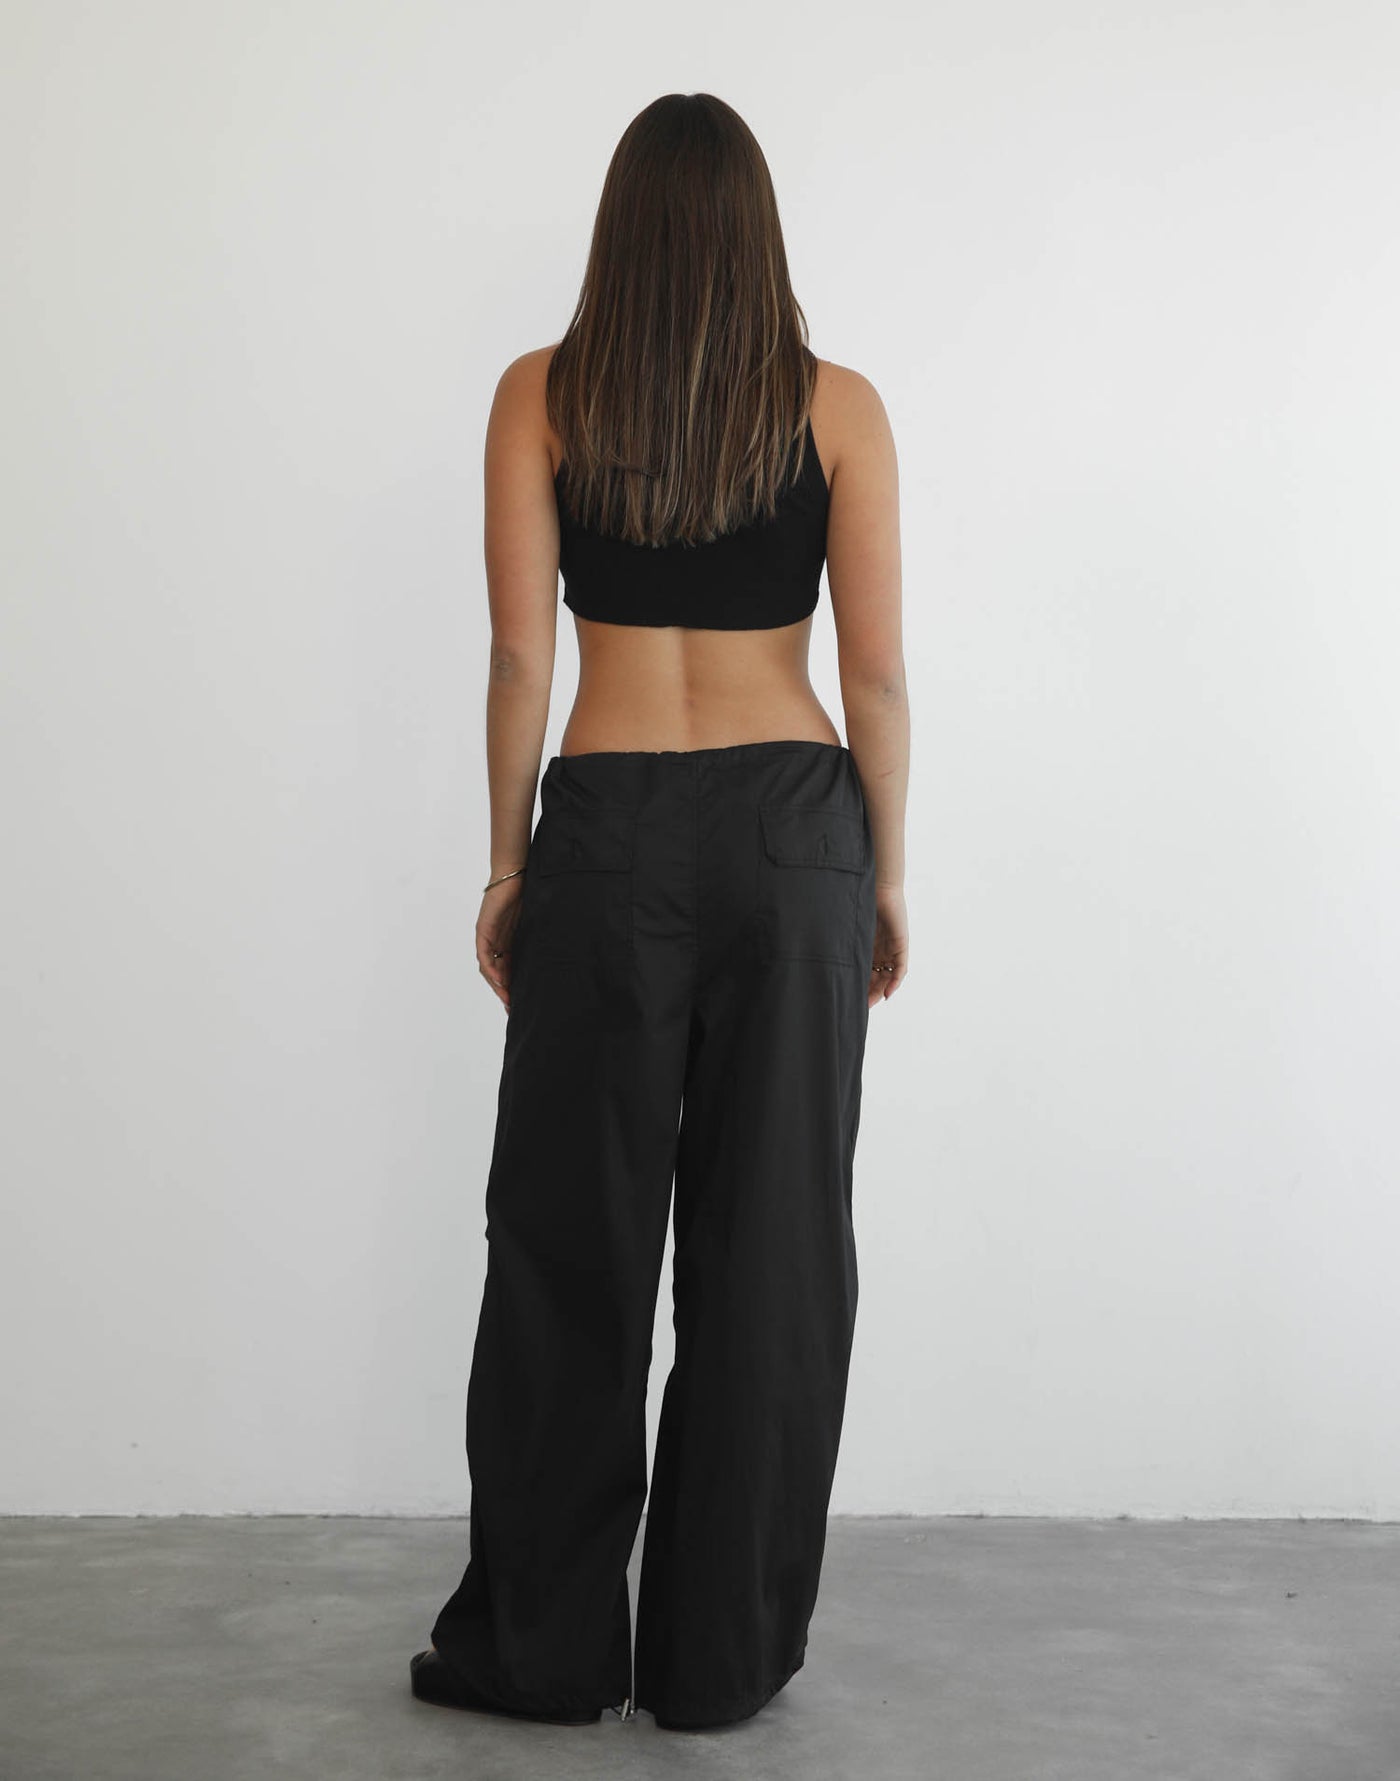 Bamba Parachute Pants (Black) - Black Parachute Pants - Women's Pants - Charcoal Clothing